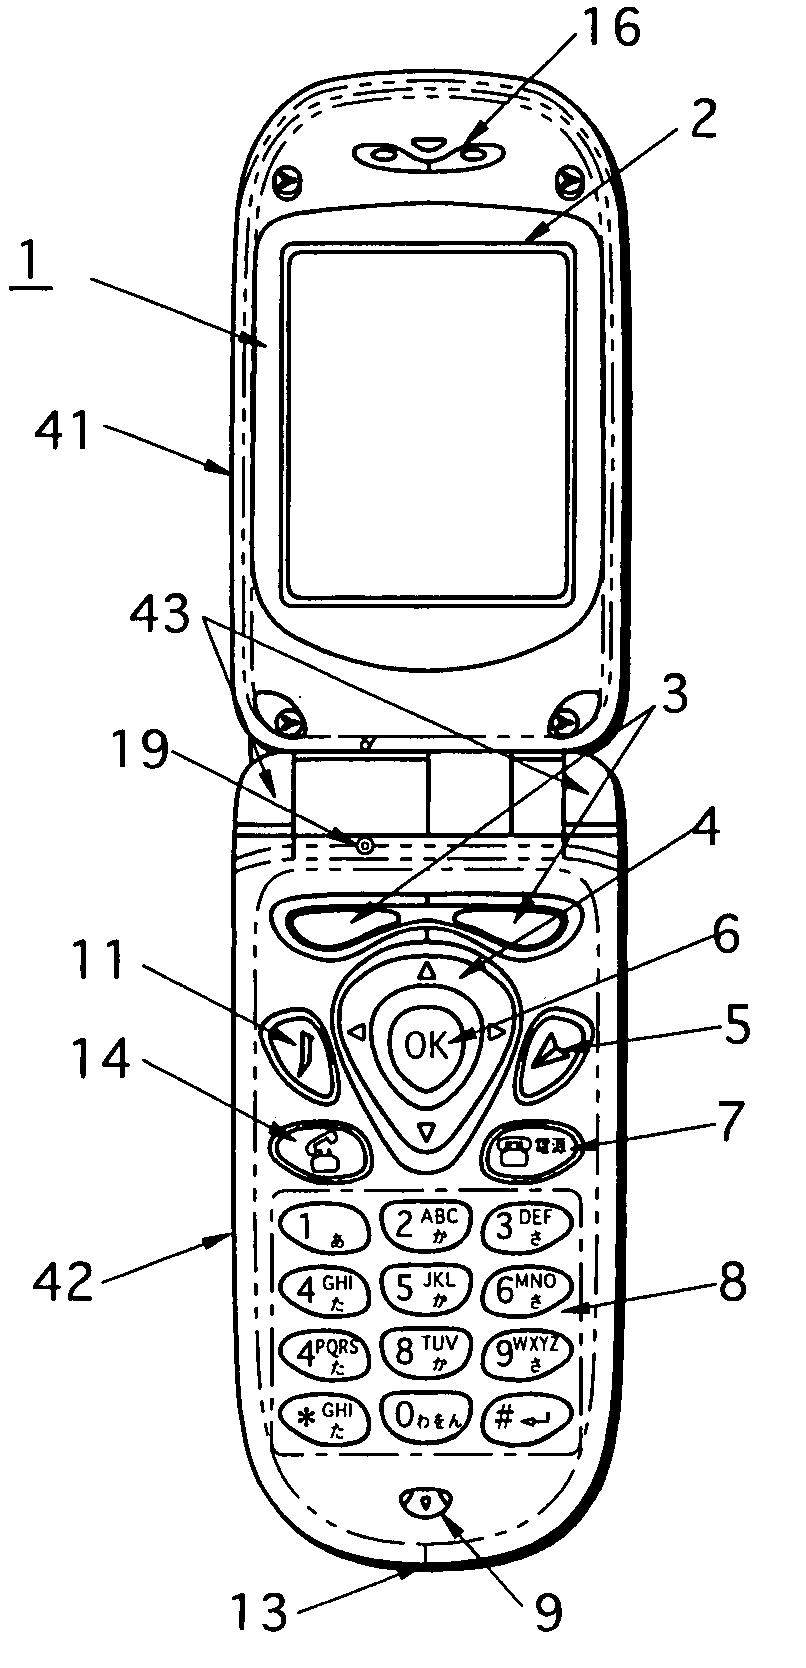 Folding communication terminal apparatus